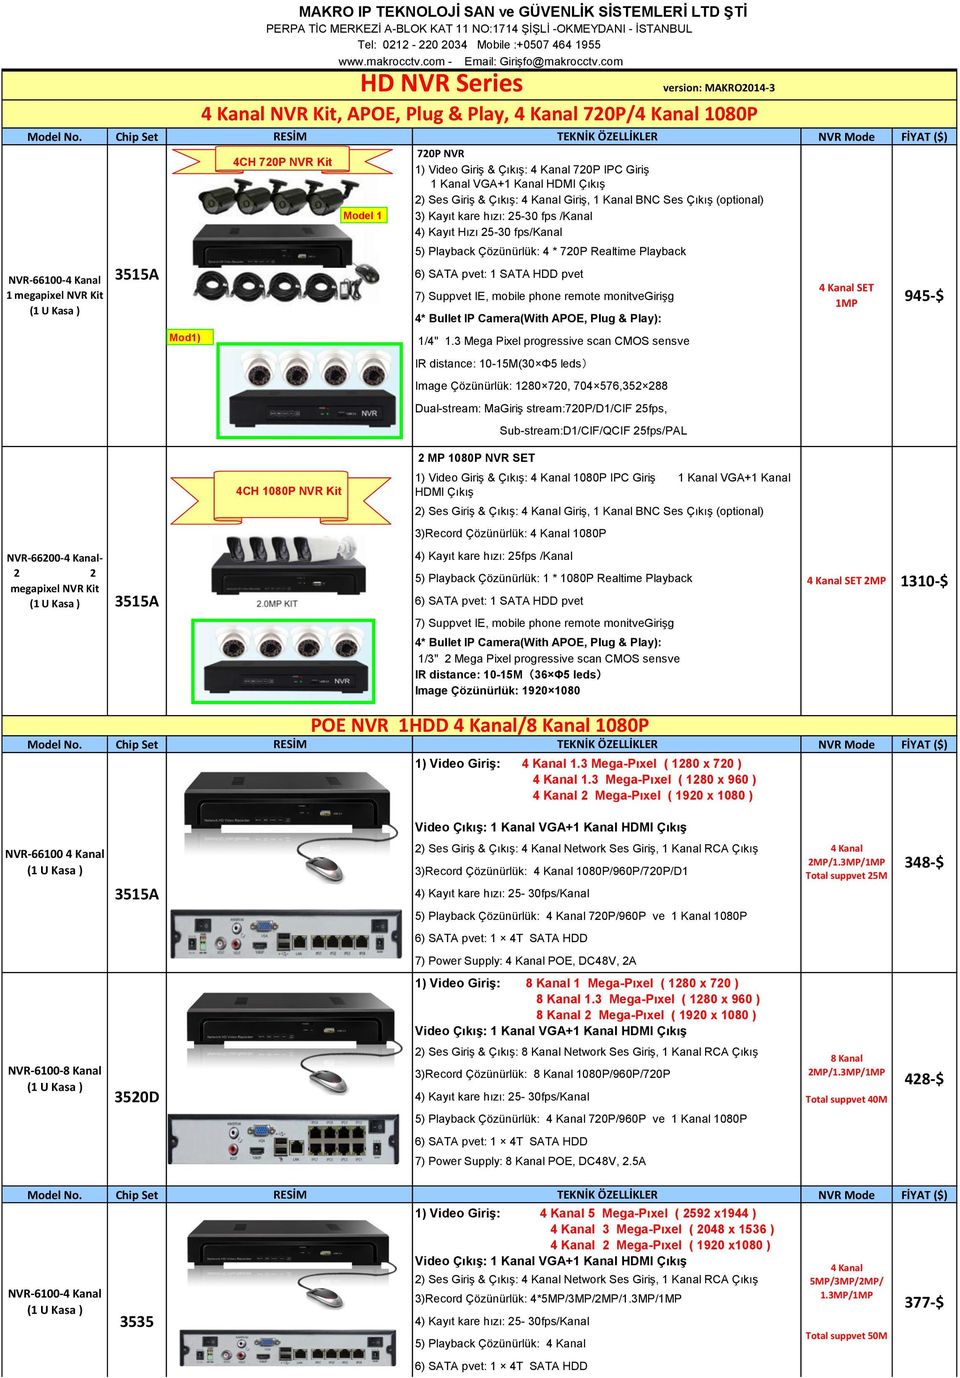 Kanal BNC Ses Çıkış (optional) Model 1 3) Kayıt kare hızı: 25-30 fps /Kanal 4) Kayıt Hızı 25-30 fps/kanal NVR-66100-4 Kanal 1 megapixel NVR Kit (1 U Kasa ) 3515A Mod1) MAKRO IP TEKNOLOJİ SAN ve